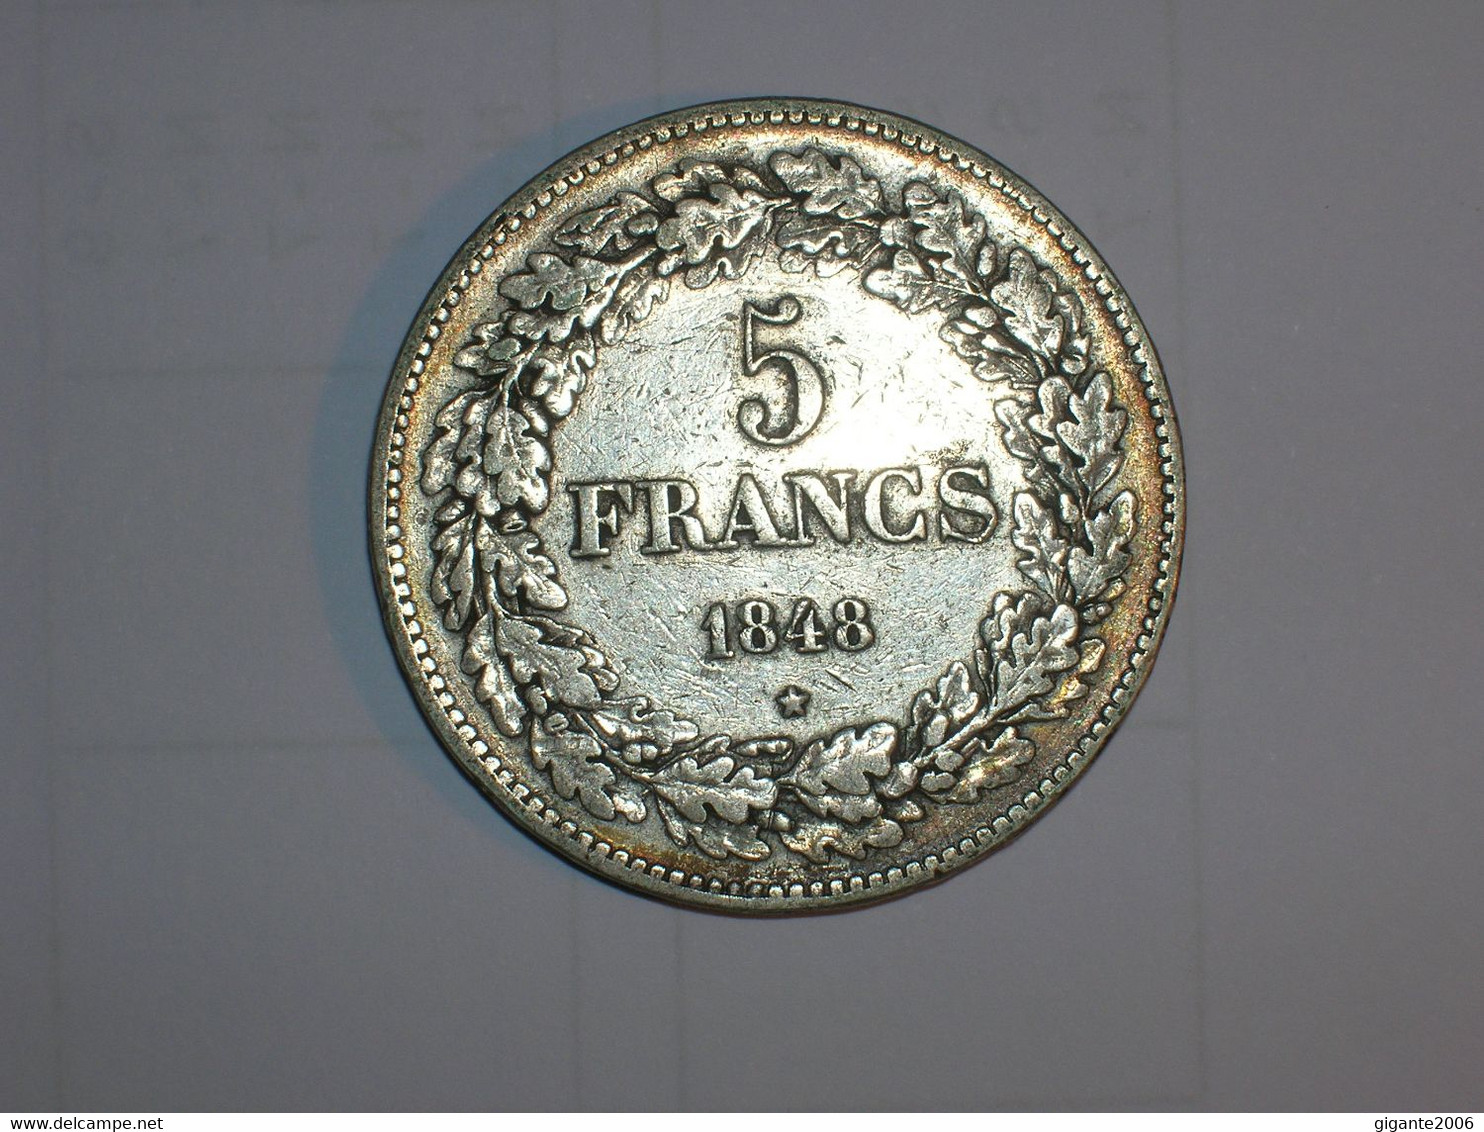 BELGICA 5 FRANCOS 1848 (5539) - 5 Frank